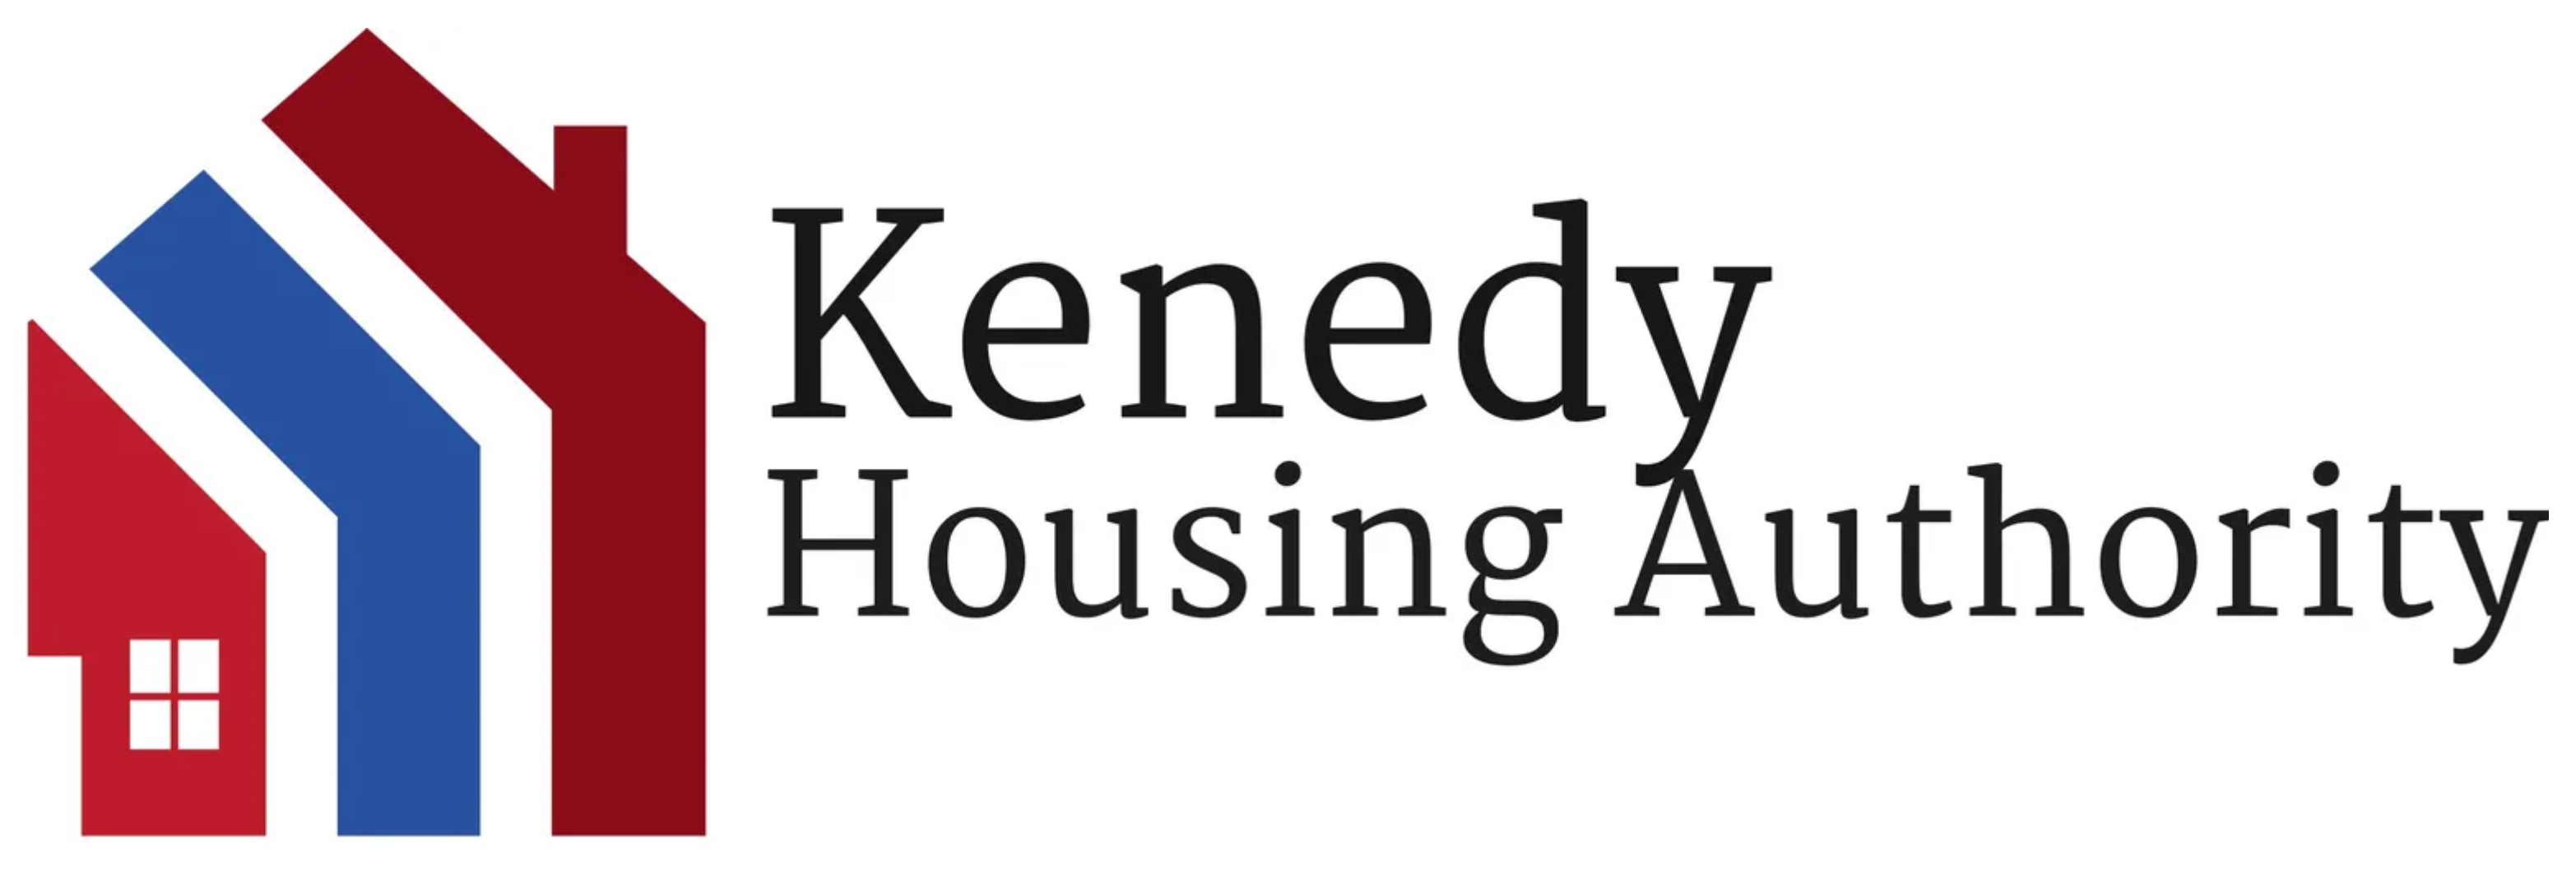 Kenedy Housing Authority – Located in Kenedy Texas